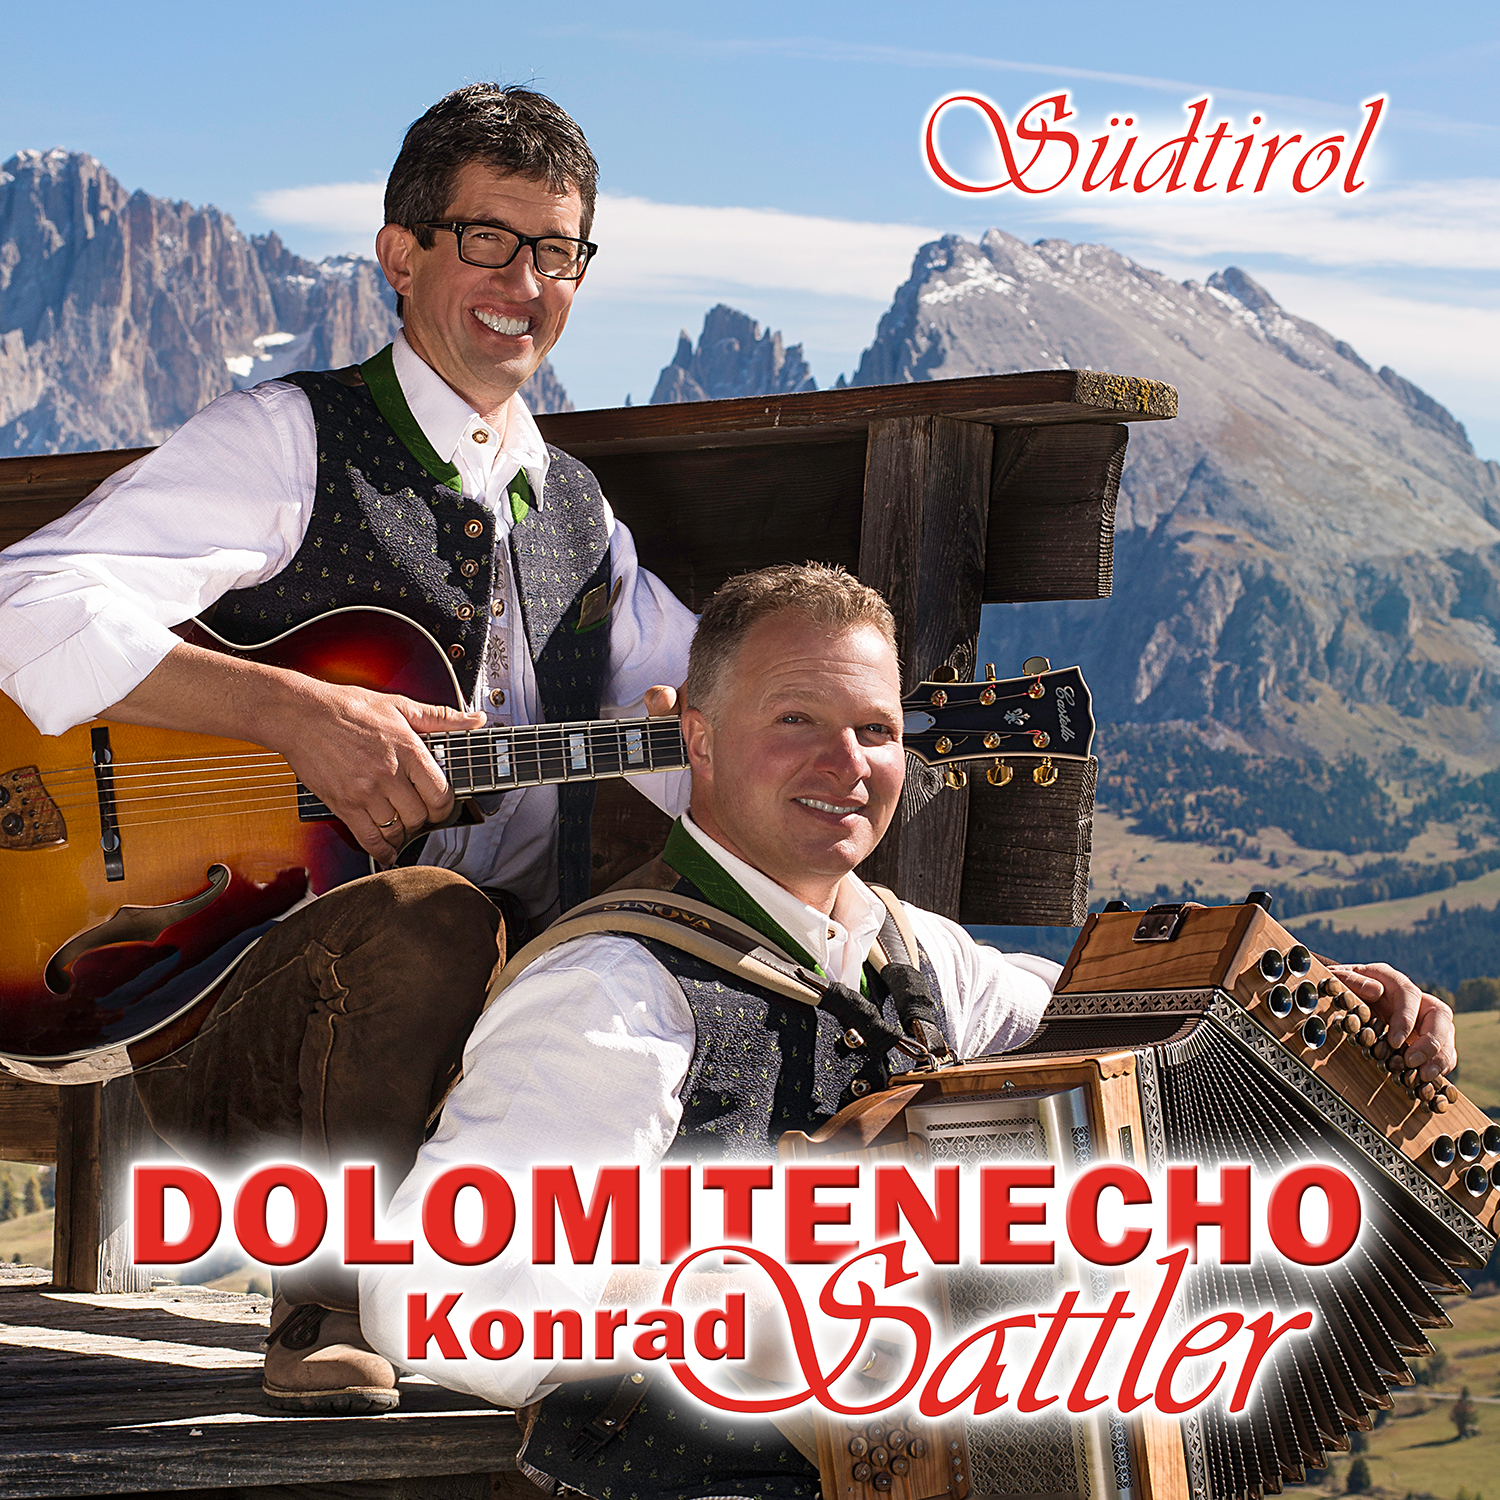 Dolomitenecho-Konrad Sattler | Südtirol